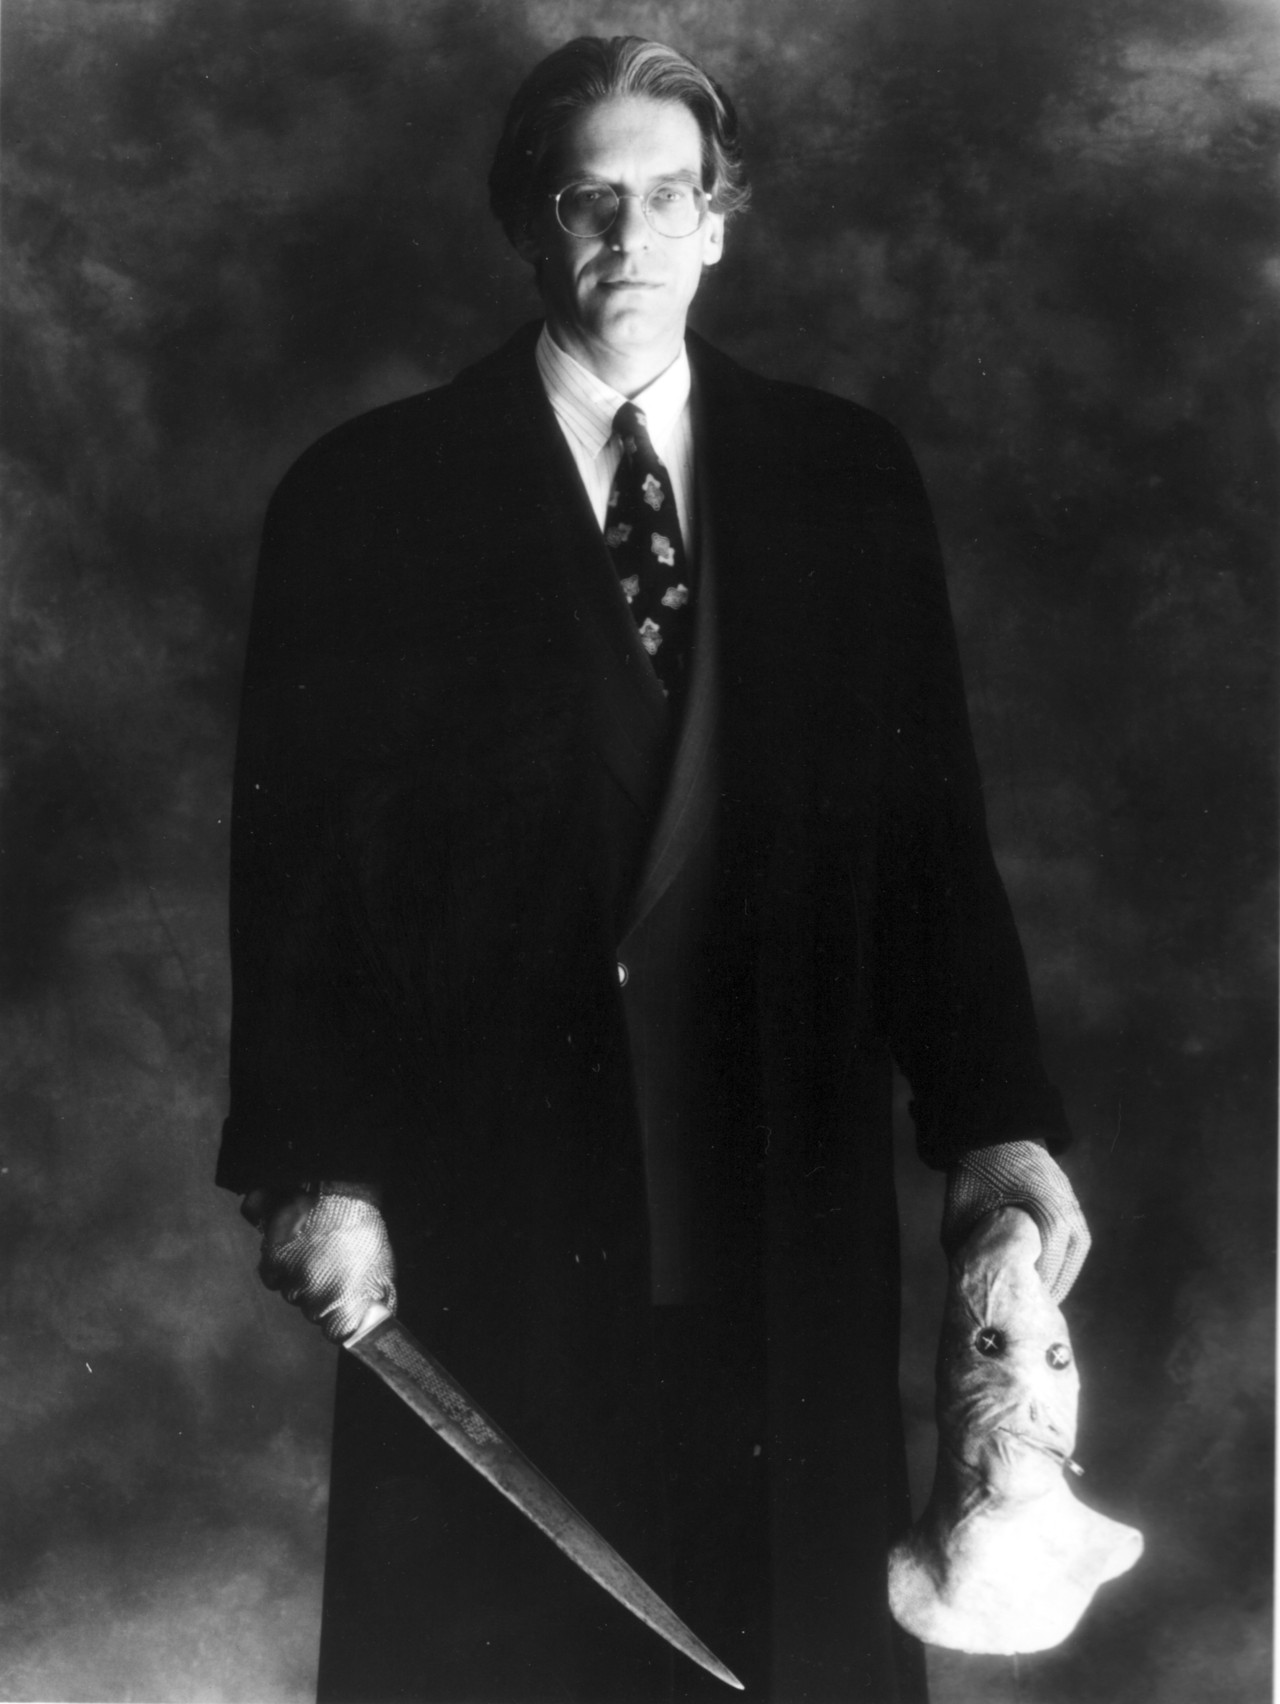 Image result for nightbreed david cronenberg"